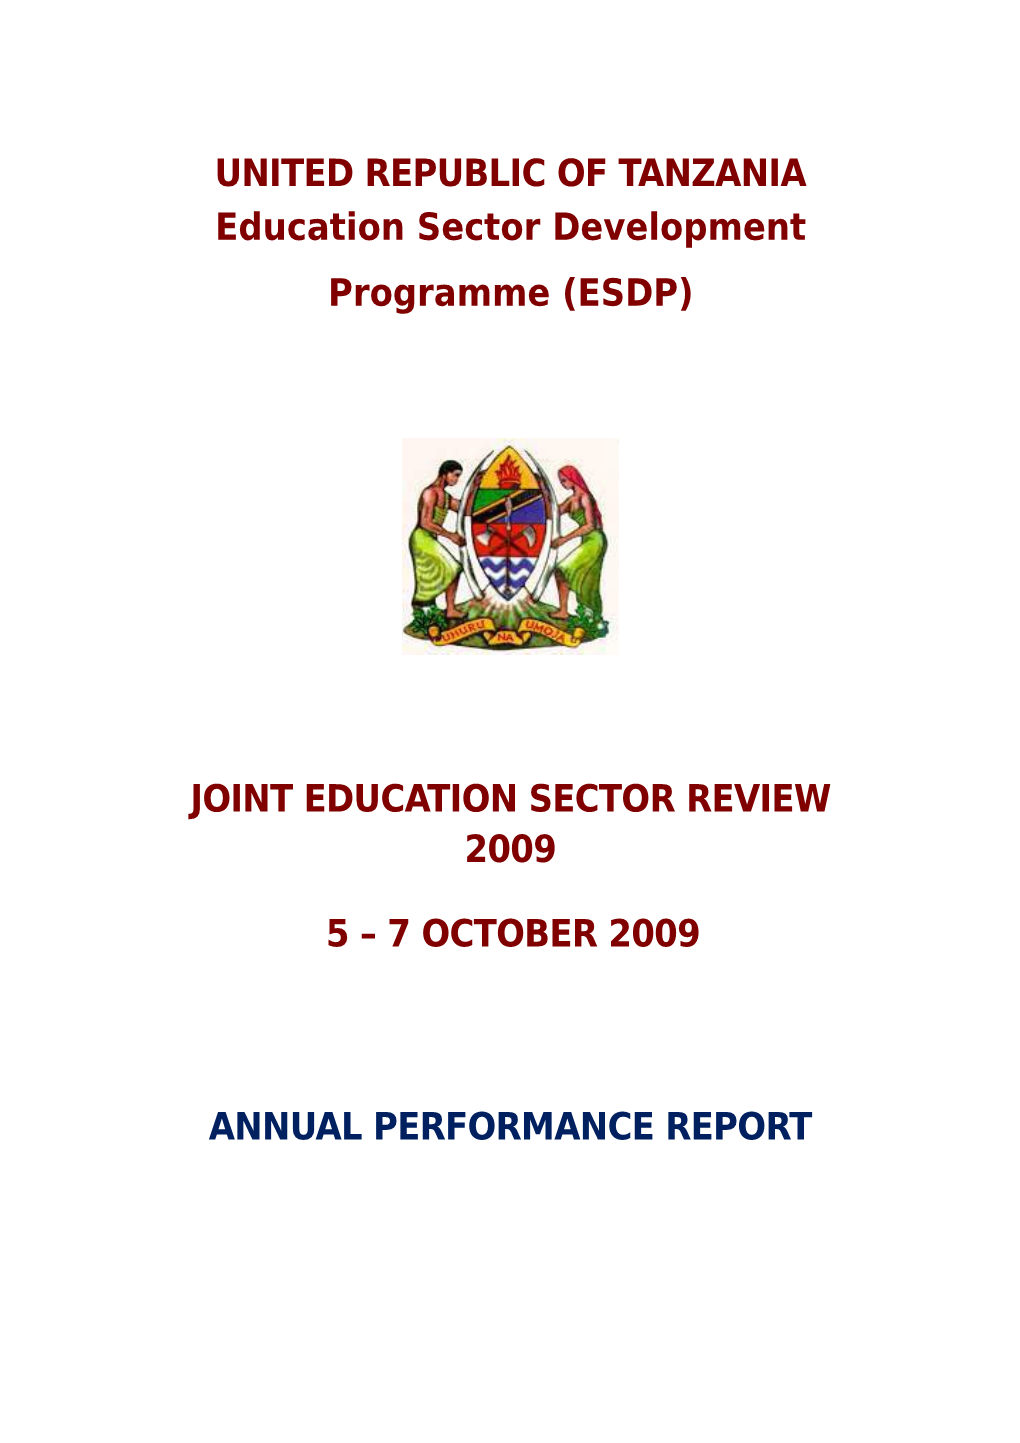 Education Sector Development Programme (ESDP)